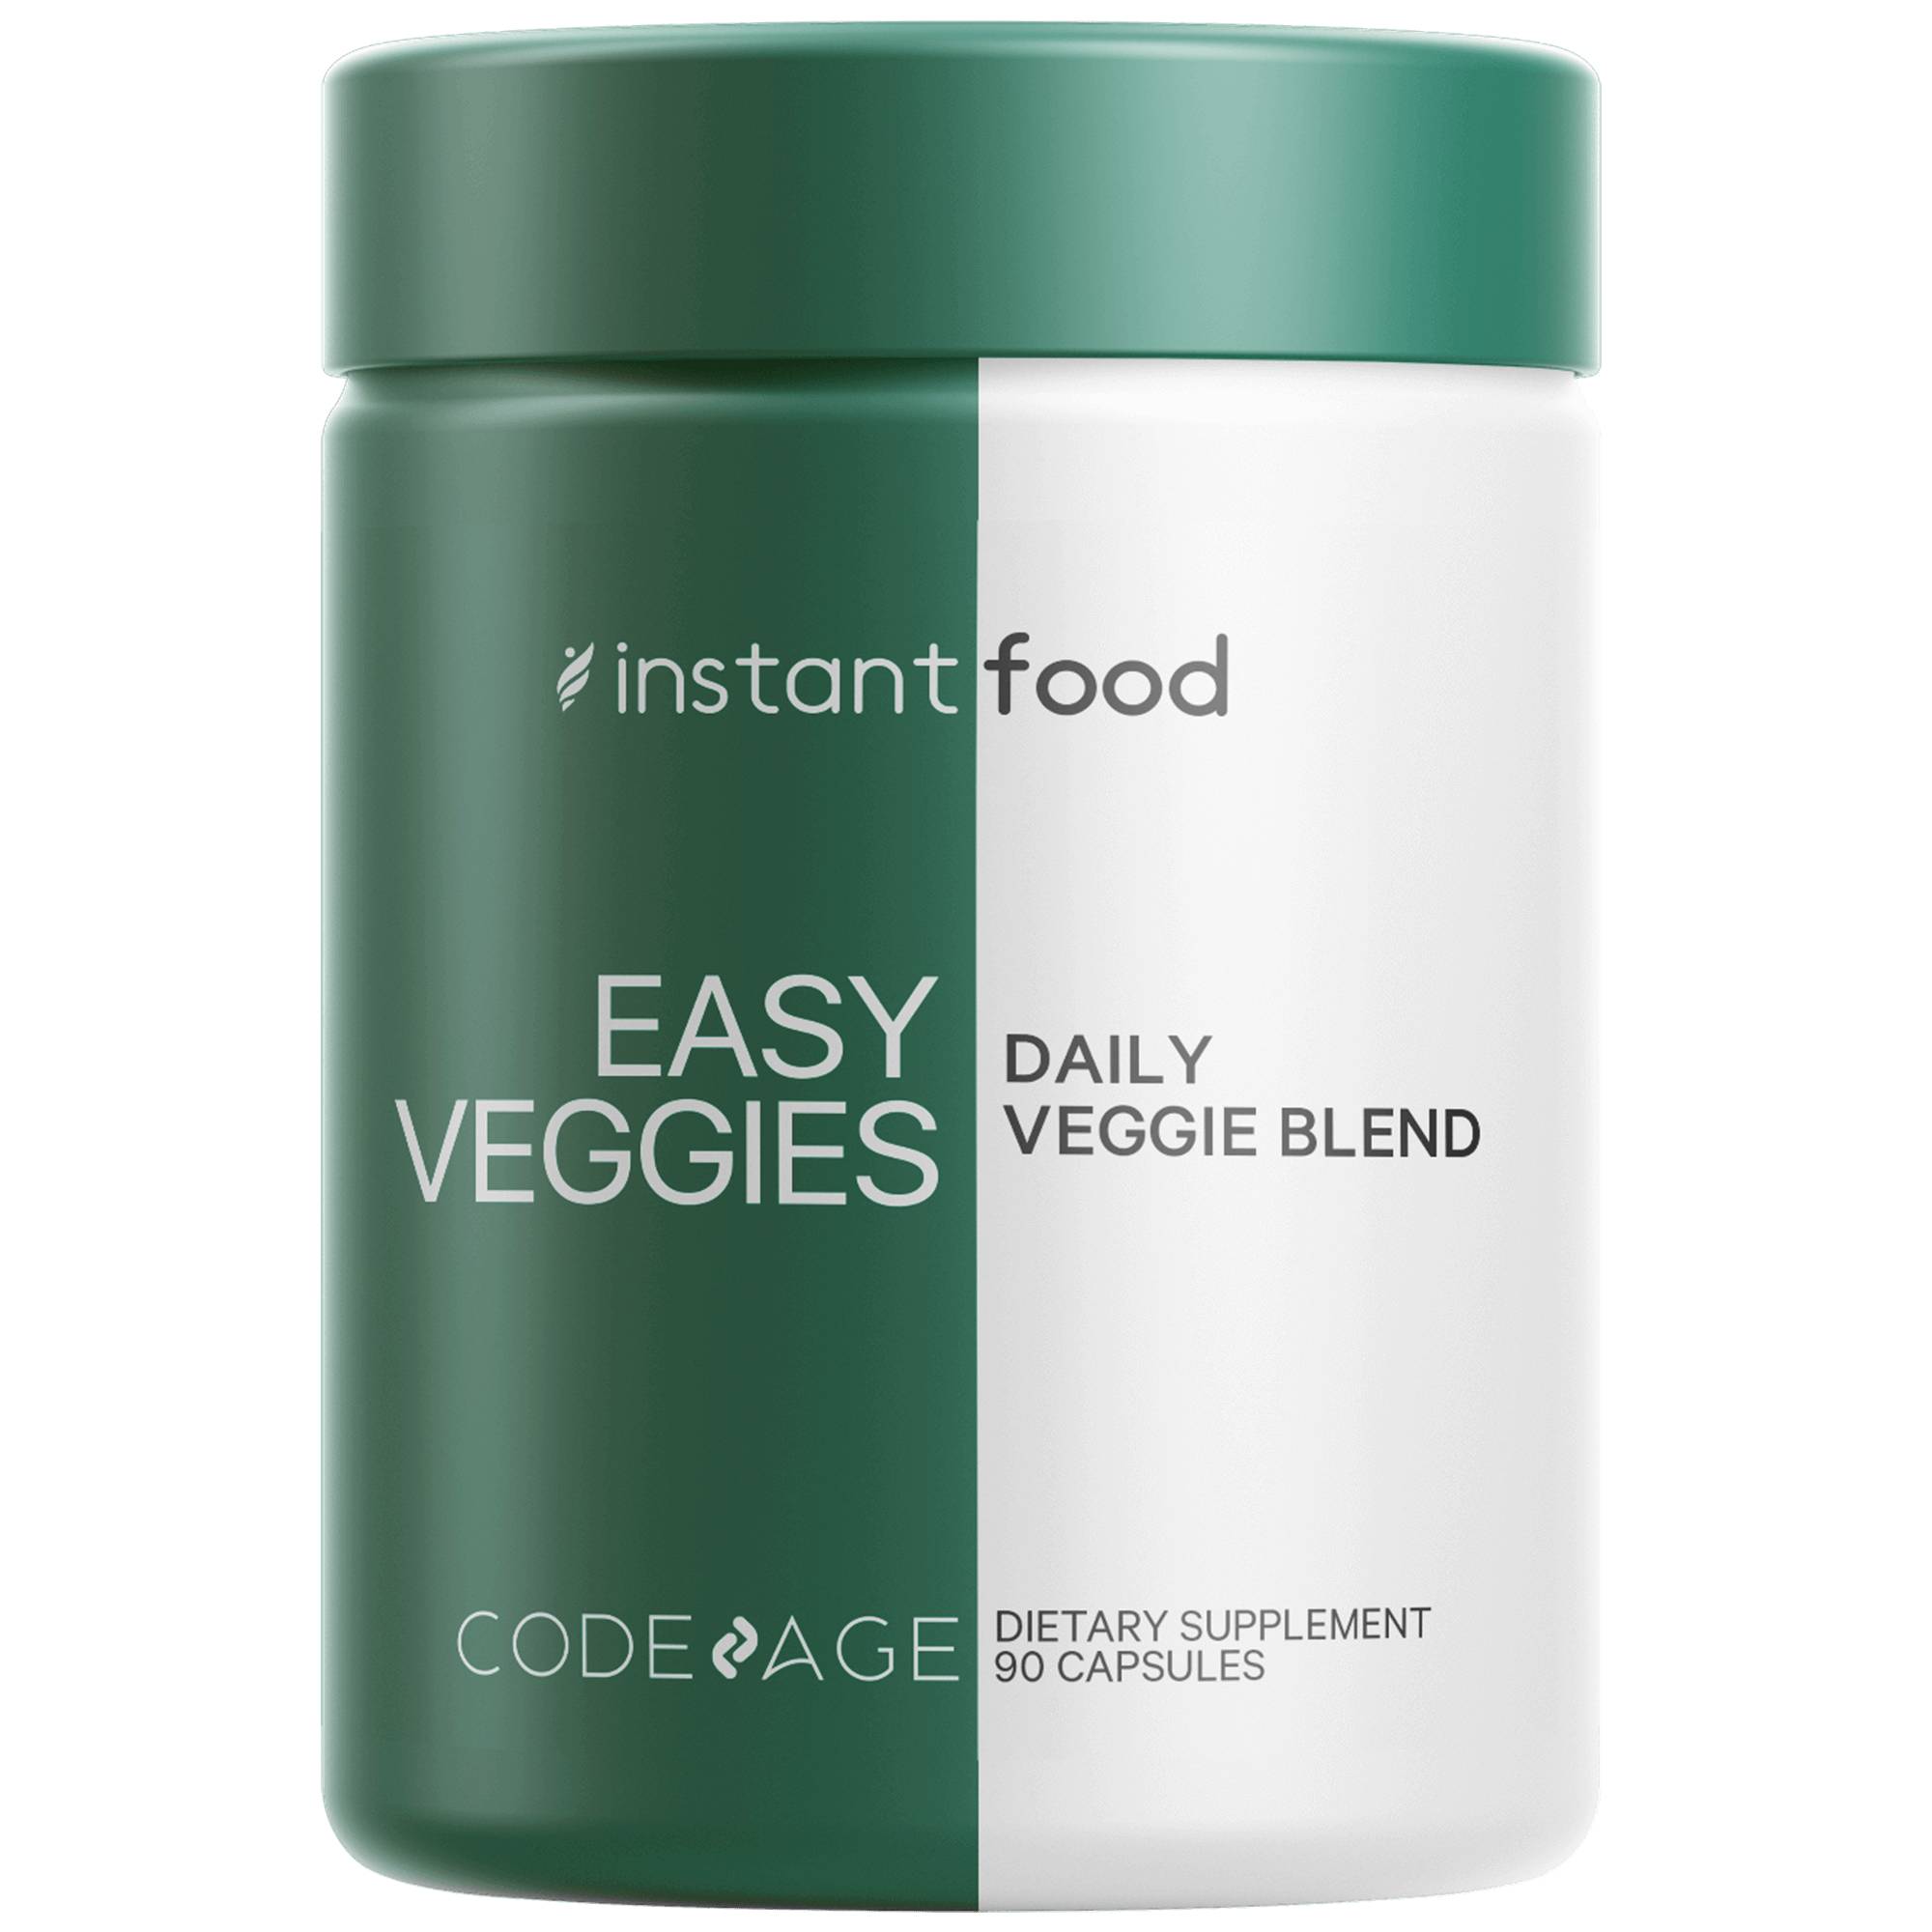 Instantfood Easy Veggies, Vegan Greens Vitamins Supplement Capsules, Whole Food Vegetables, 90CT